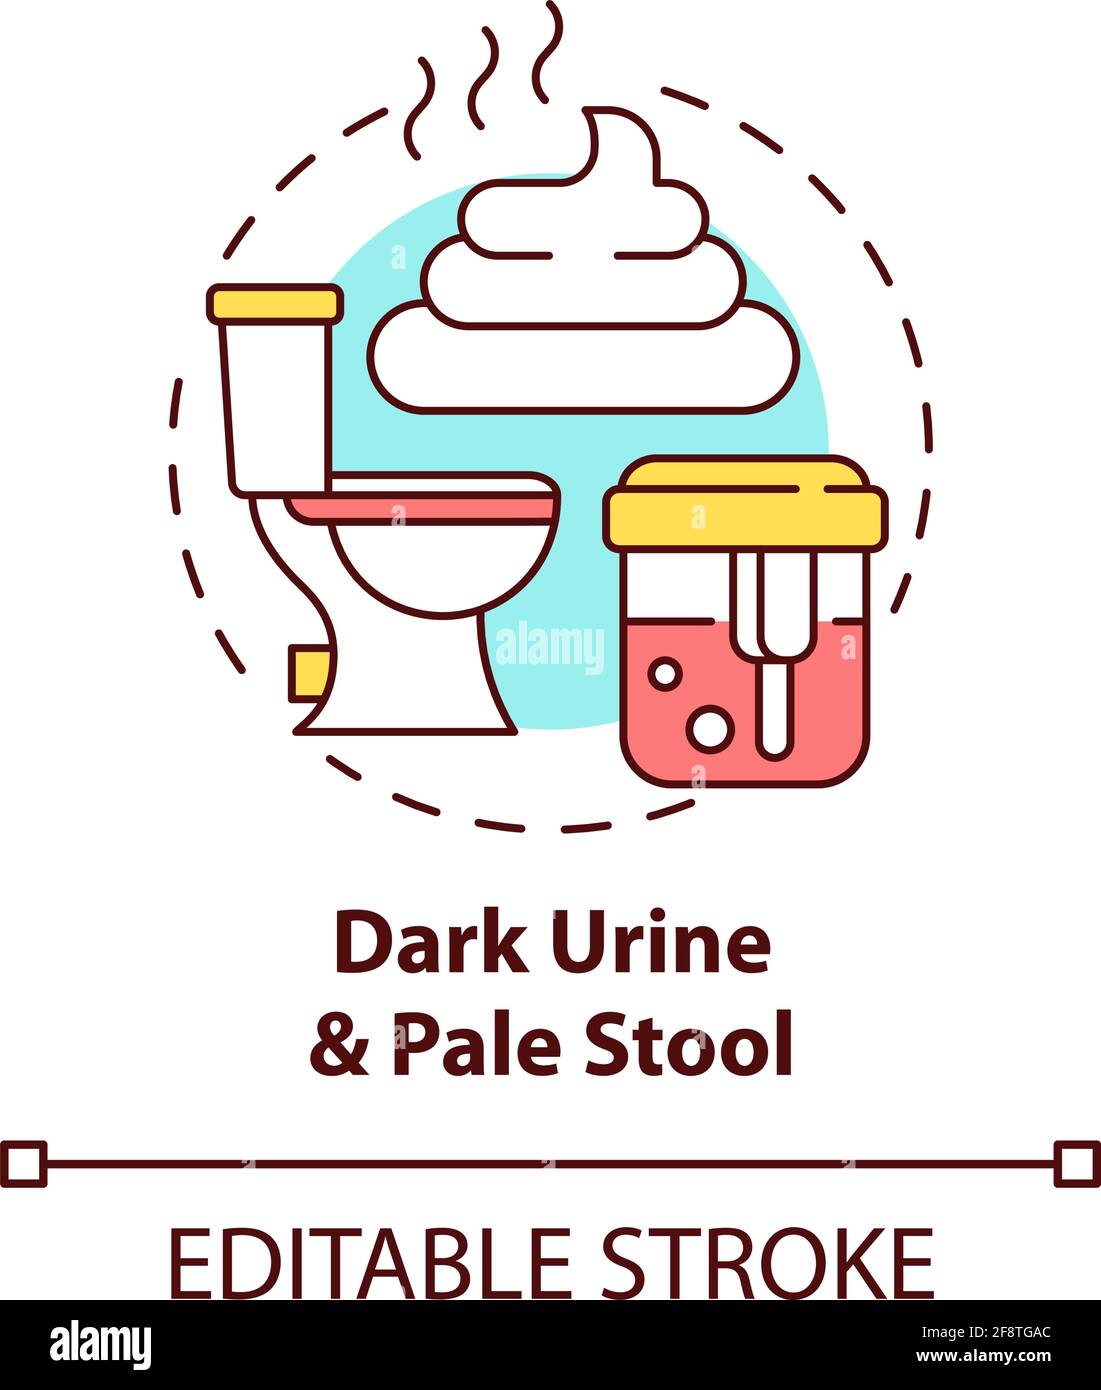 Dark urine and pale stool concept icon Stock Vector Image & Art - Alamy